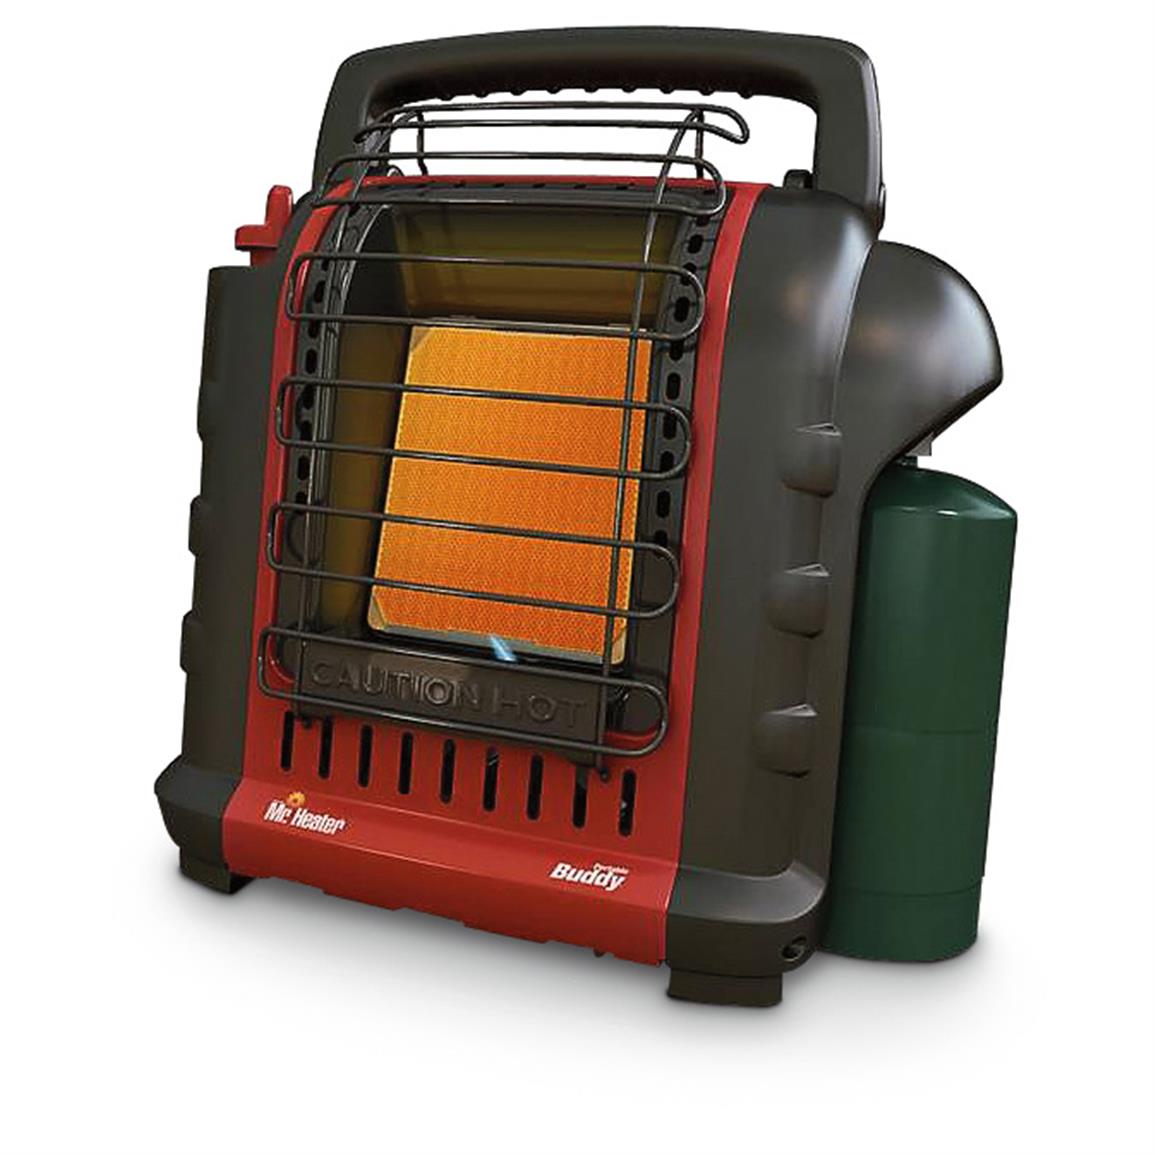 Mr Heater Buddy Portable Propane Heater, 9,000 BTU